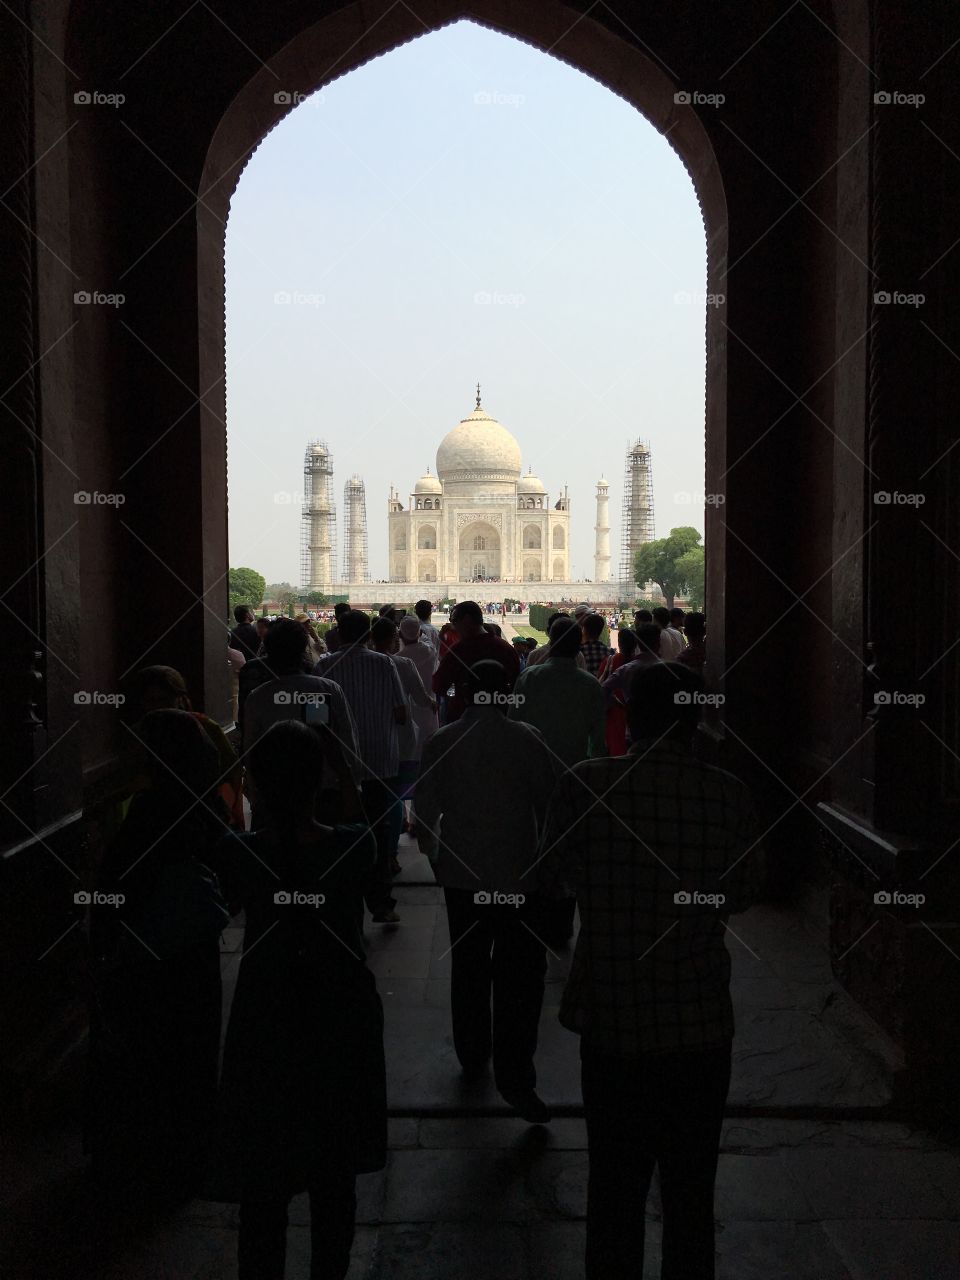 The iconic Taj Mahal in Agra, India. Symmetry on display. 